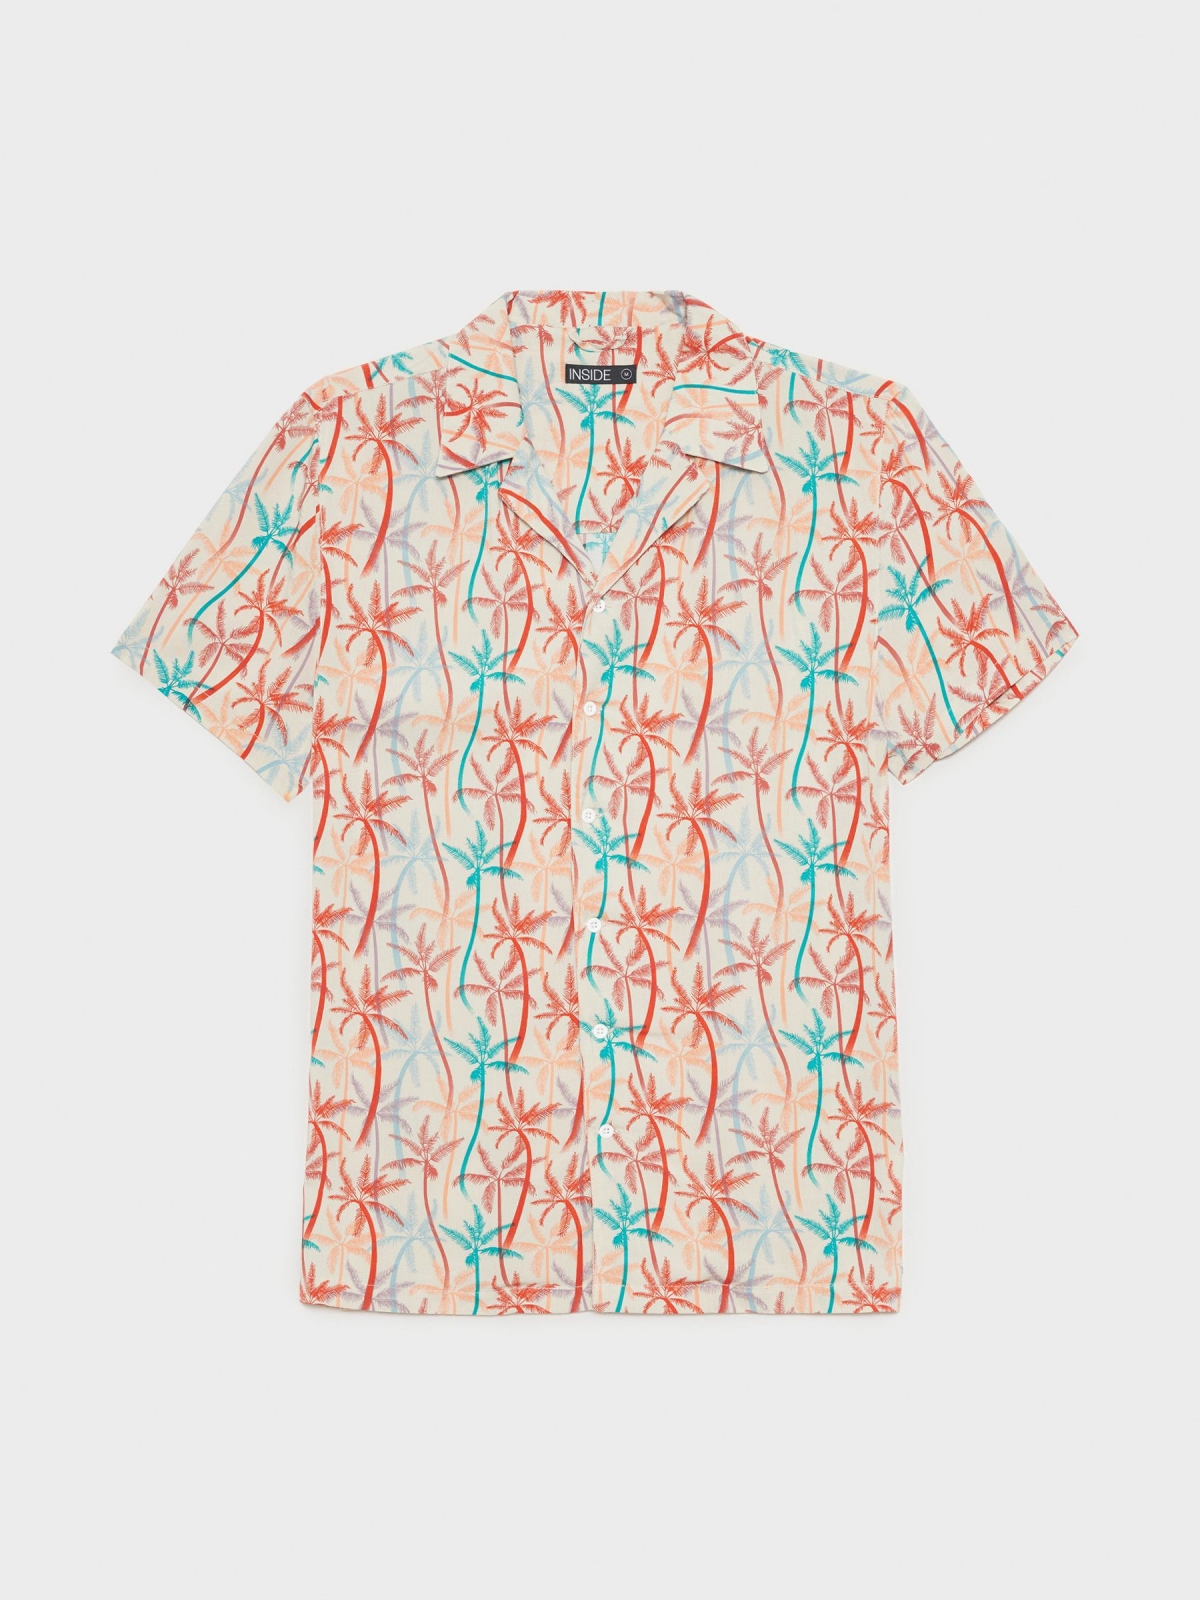  Multicolor palm print shirt off white